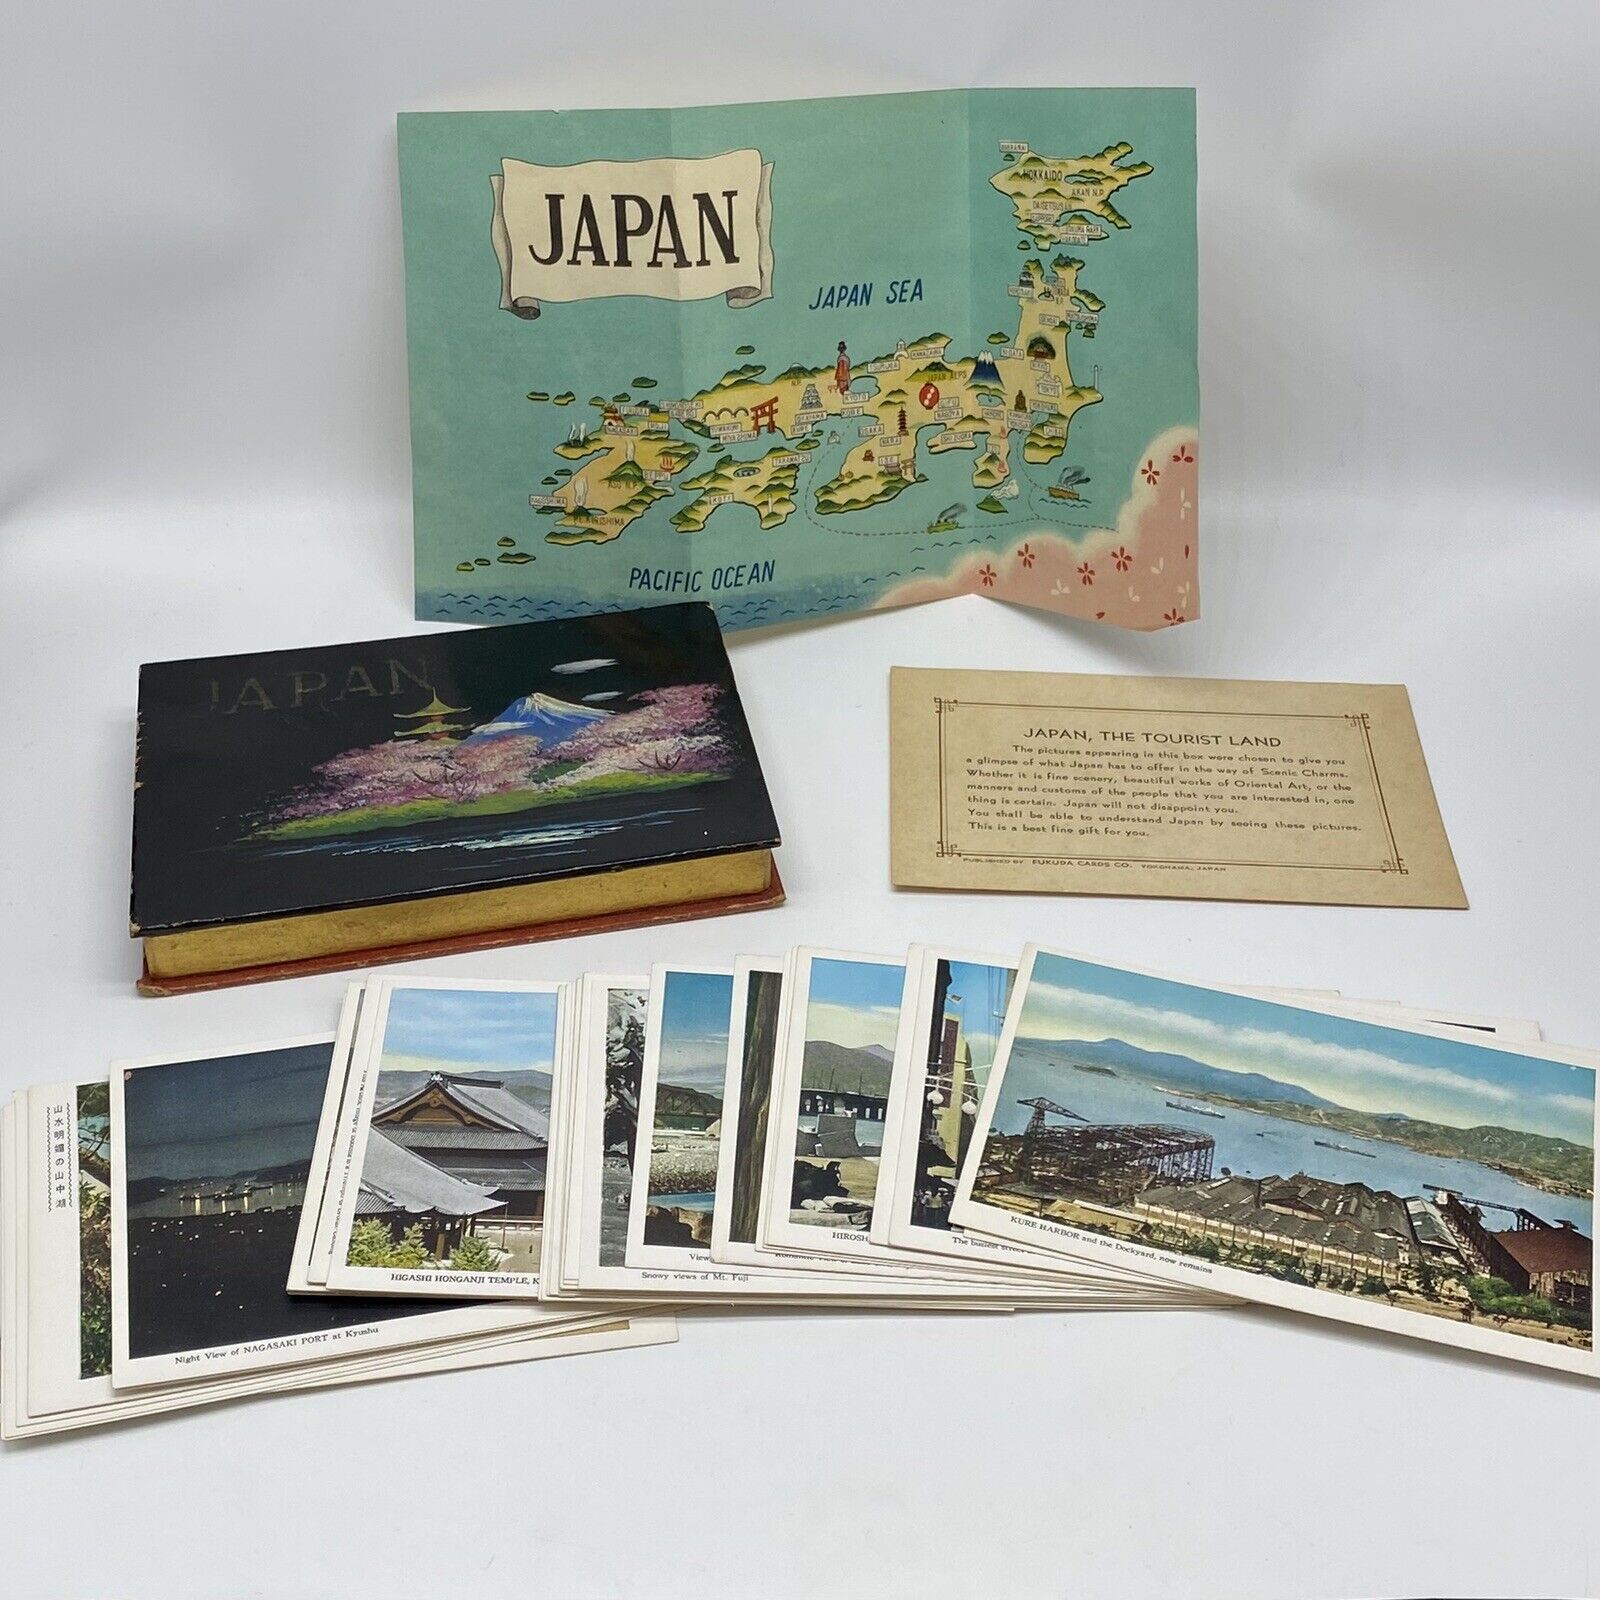 Vintage Fukuda Cards Co 40 Card Set w/ Box Insert & Map Japan the Tourist Land